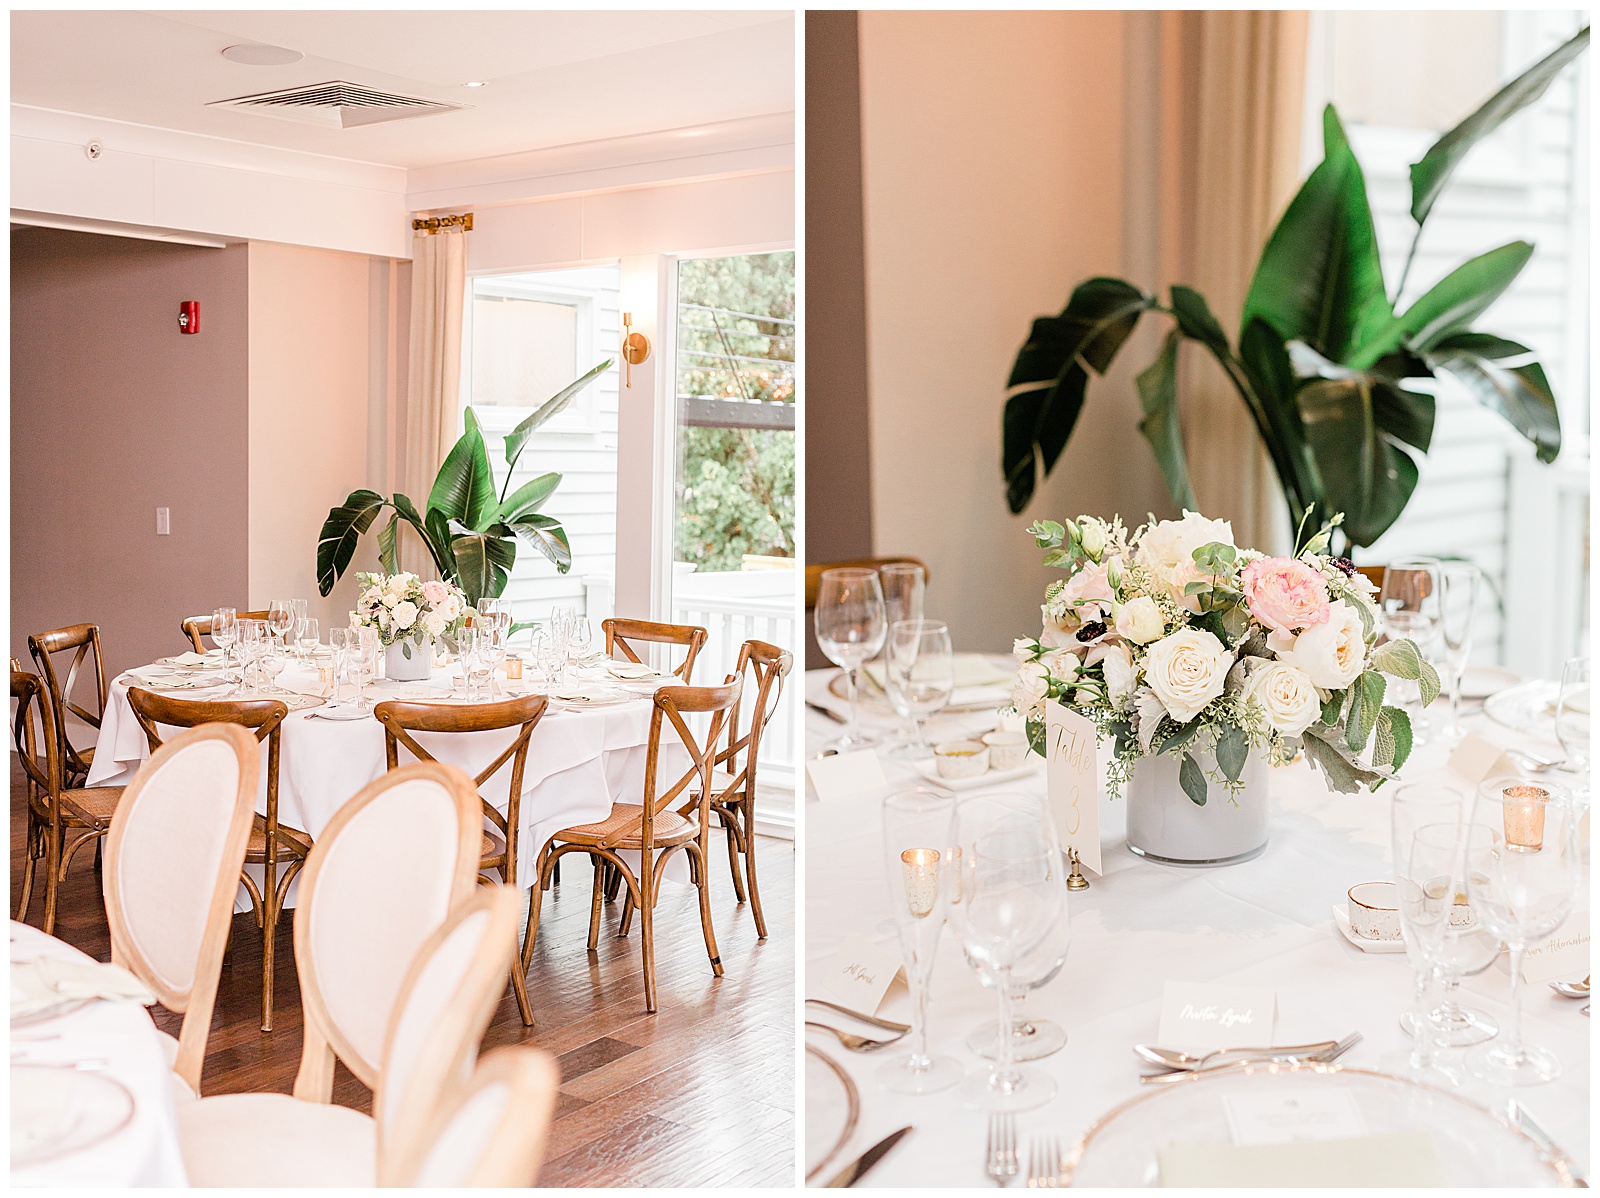 wedding-reception-tablescape-details.jpg